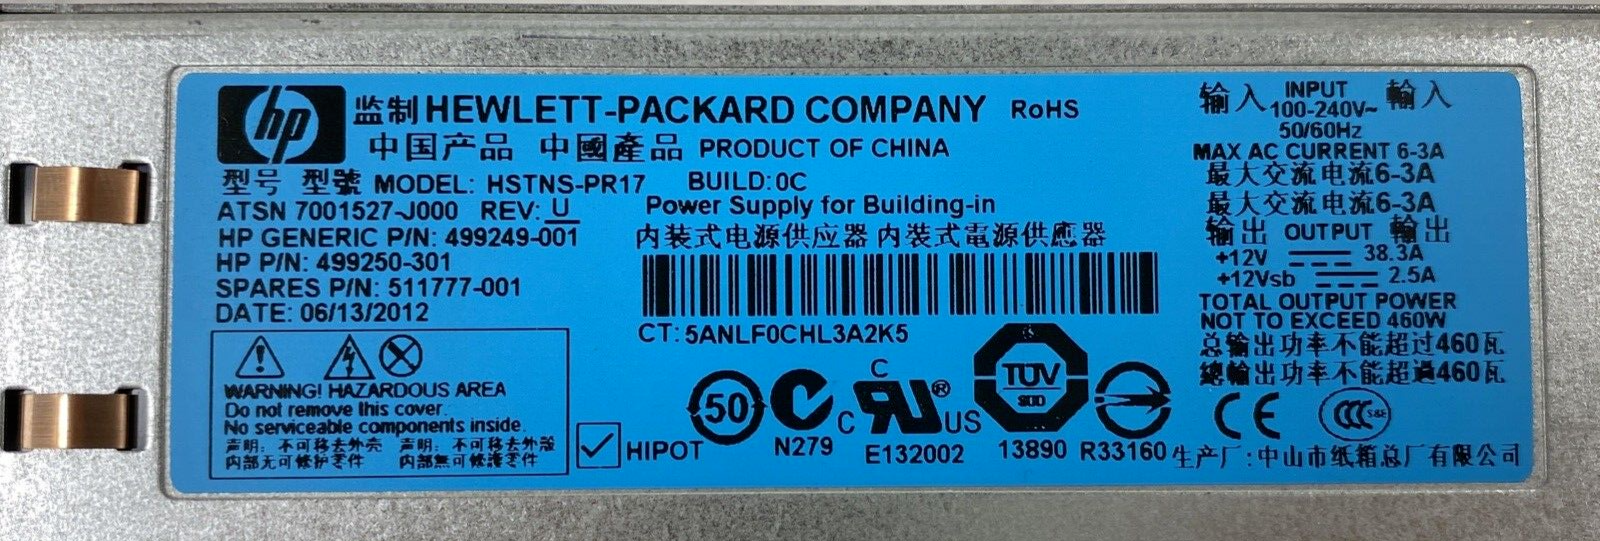 HP HSTNS-PR17 460W Switching Power Supply 499249-001 499250-001